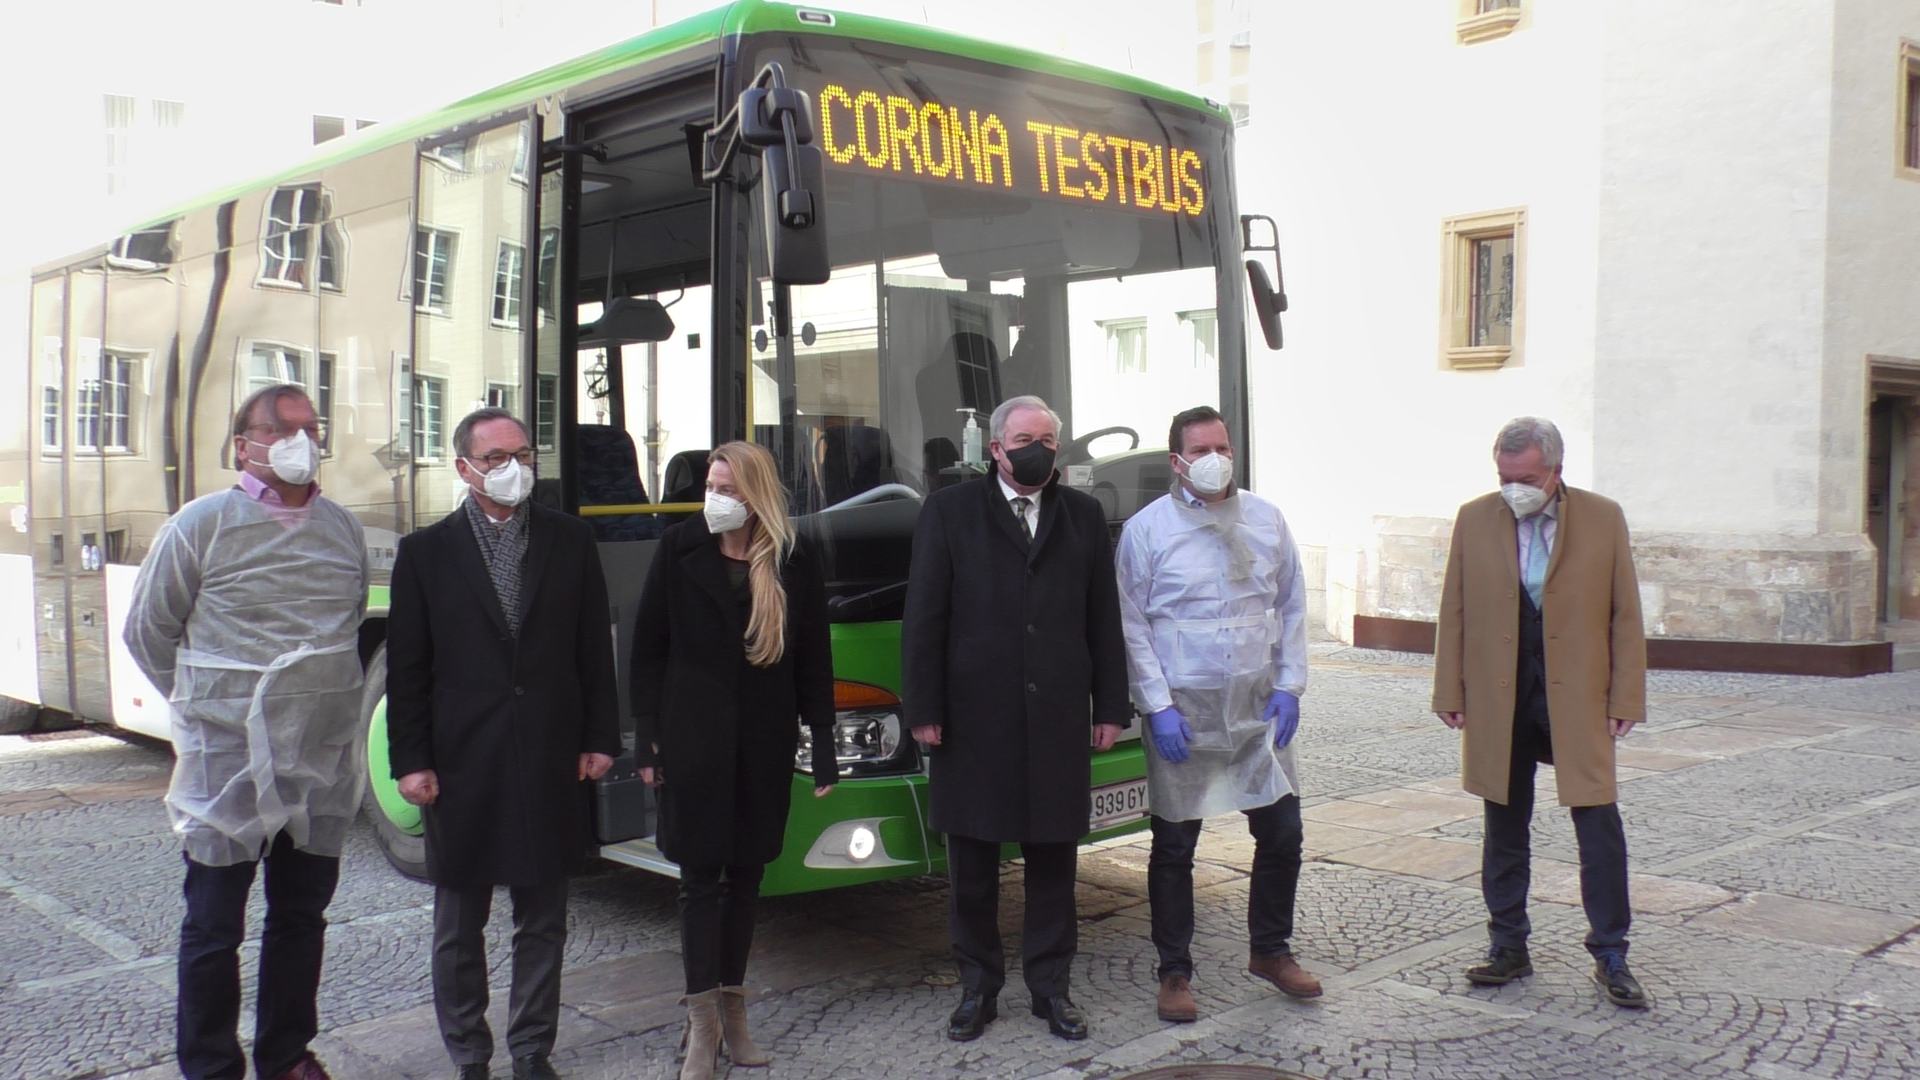 Corona-Testbus-Testbusse-Graz-Politik-SPÖ-ÖVP-Schützenhöfer-Bogner Strauß-Lang-Eitner-Schützenhöfer-Steiermark-Sars-Cov-2-Covid-19-Pandemie-Testen